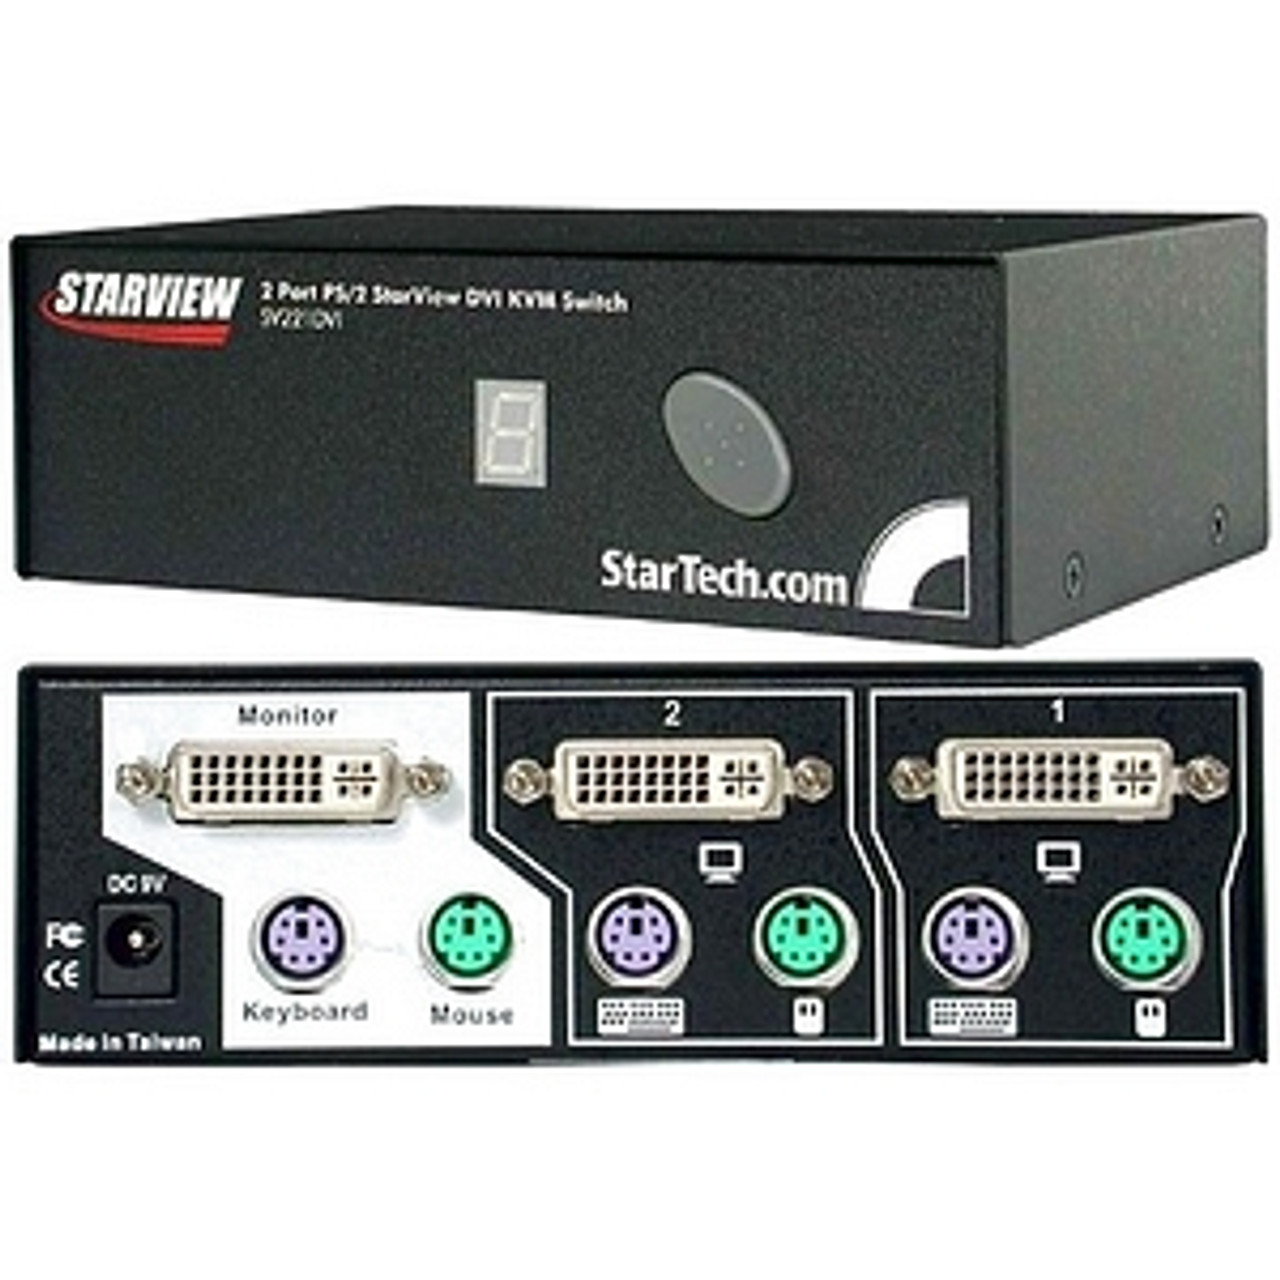 SV221DVI StarTech 2-Port DVI PS/2 2 x 1 2 x mini-DIN (PS/2) Keyboard 2 x mini-DIN (PS/2) Mouse 2 x DVI-I Video KVM Switch (Refurbished)